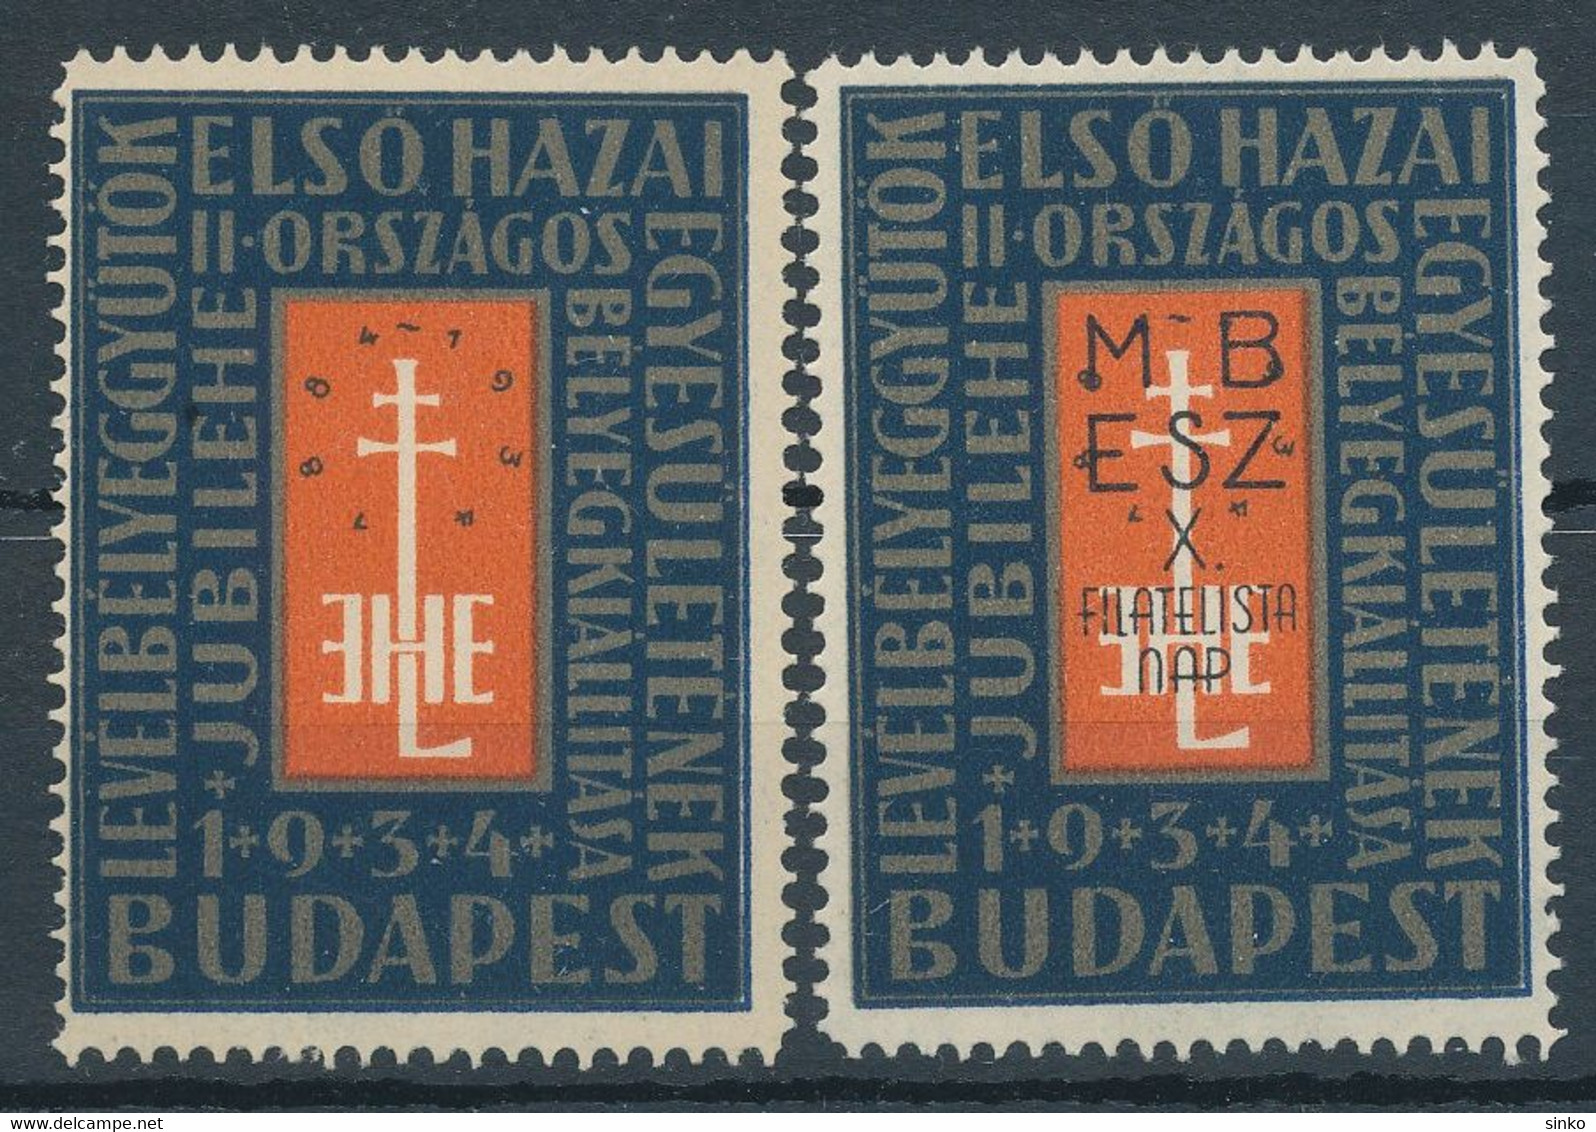 1934. Jubilehe Stamp Exhibition Budapest - Herdenkingsblaadjes